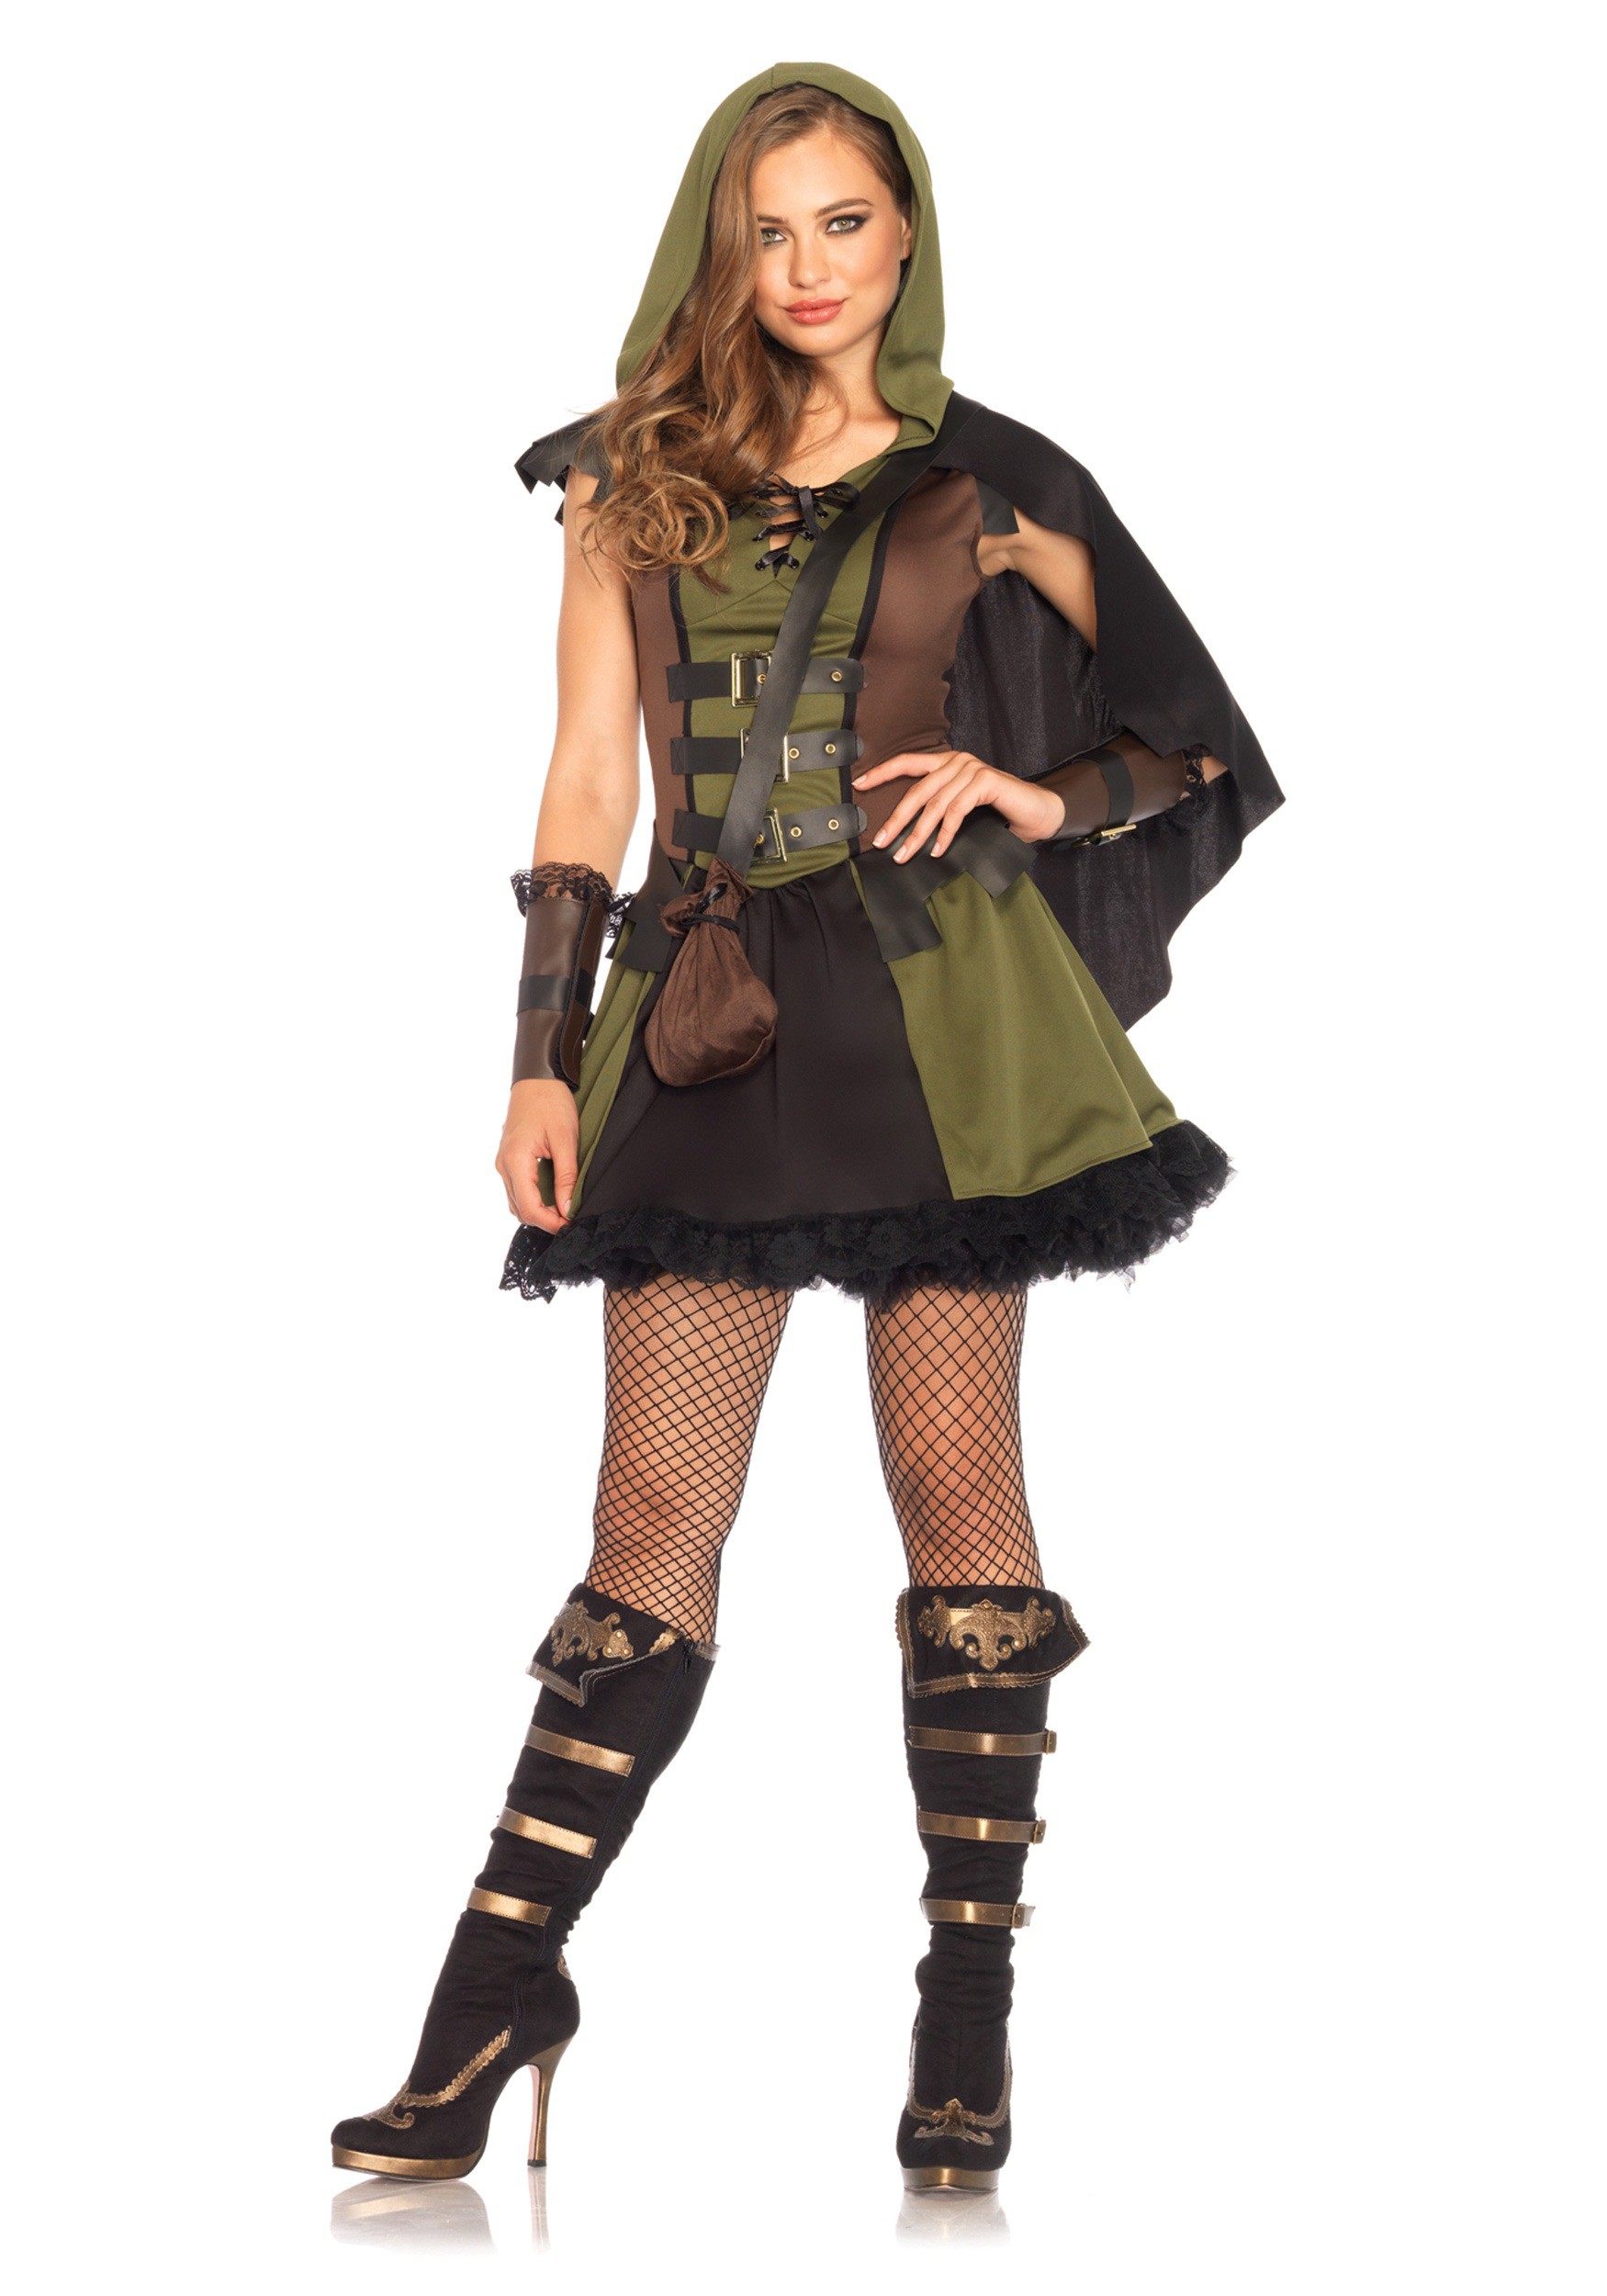 Image of Darling Robin Hood Women's Costume ID LE85281-L